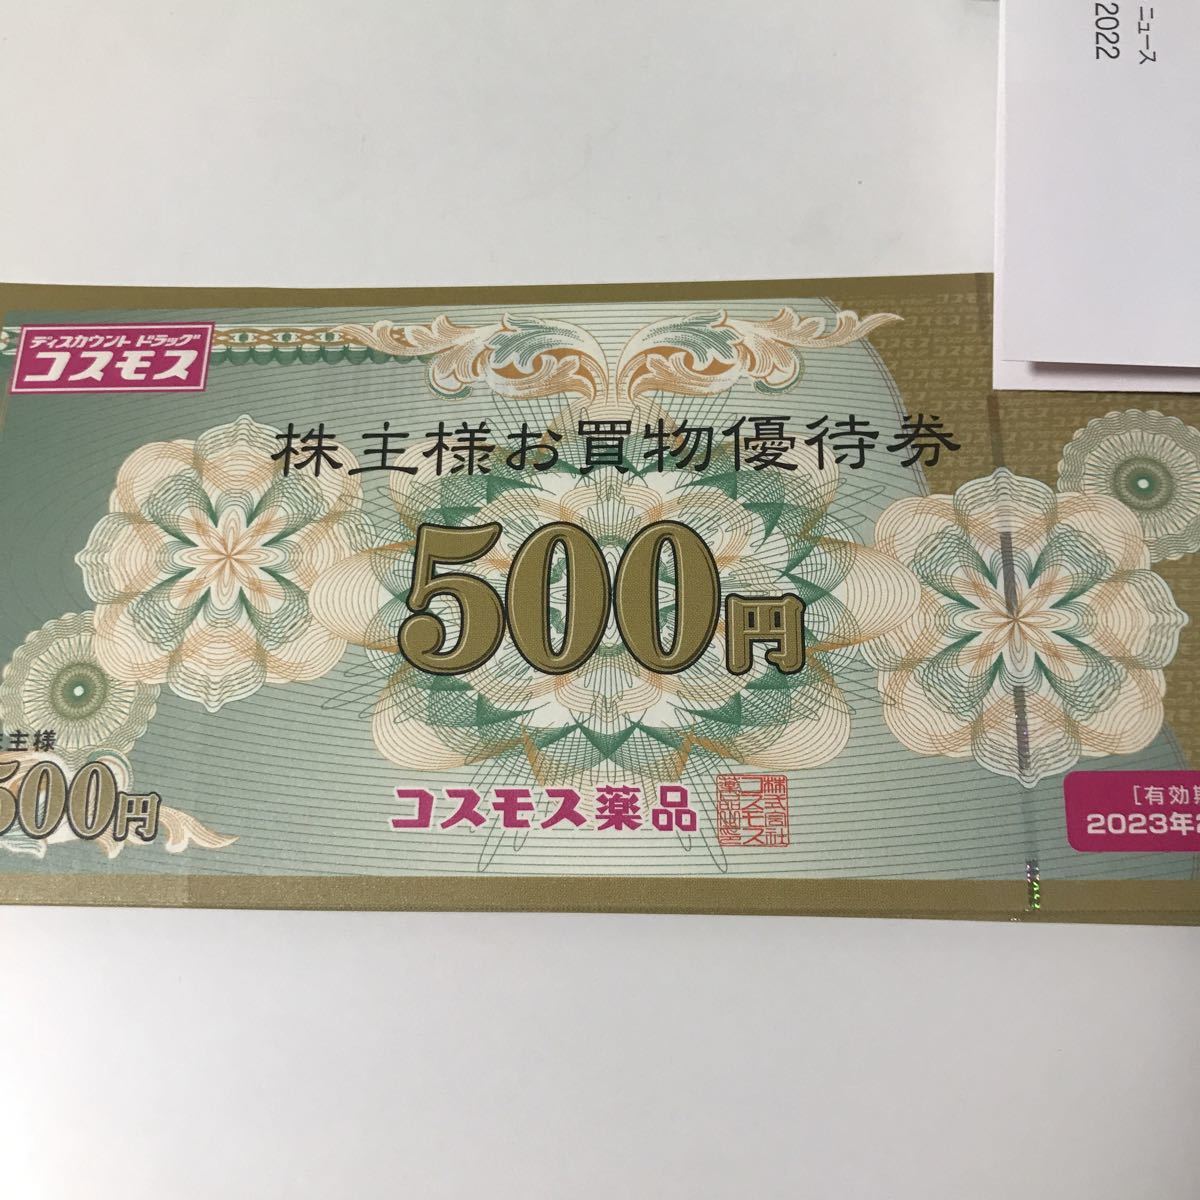 96%OFF!】 コスモス薬品 株主優待券 10,000円分 solines.ec